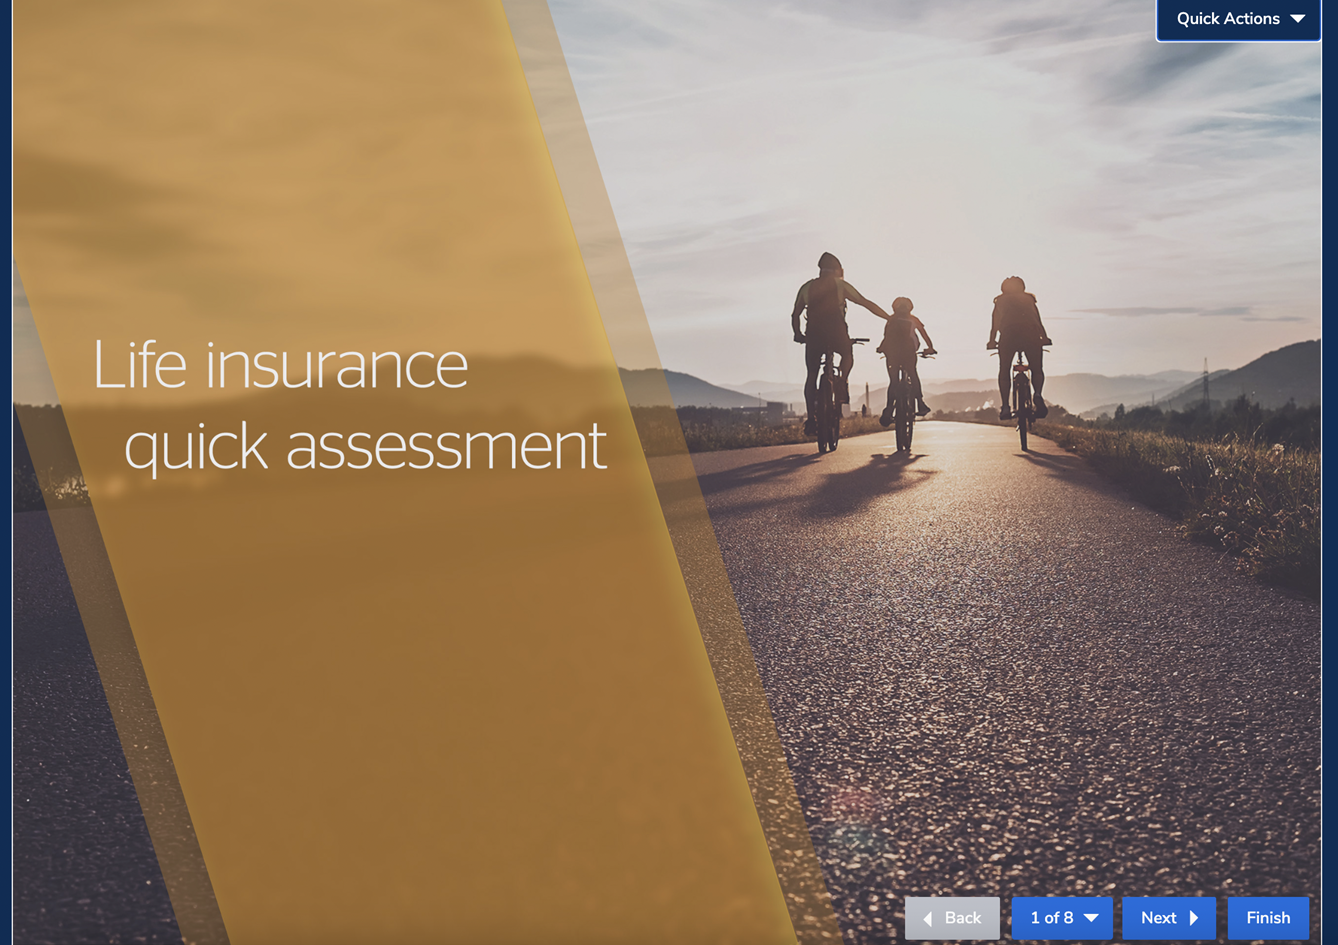 Life insurance quick assessment in the NaviPlan Presentation Module